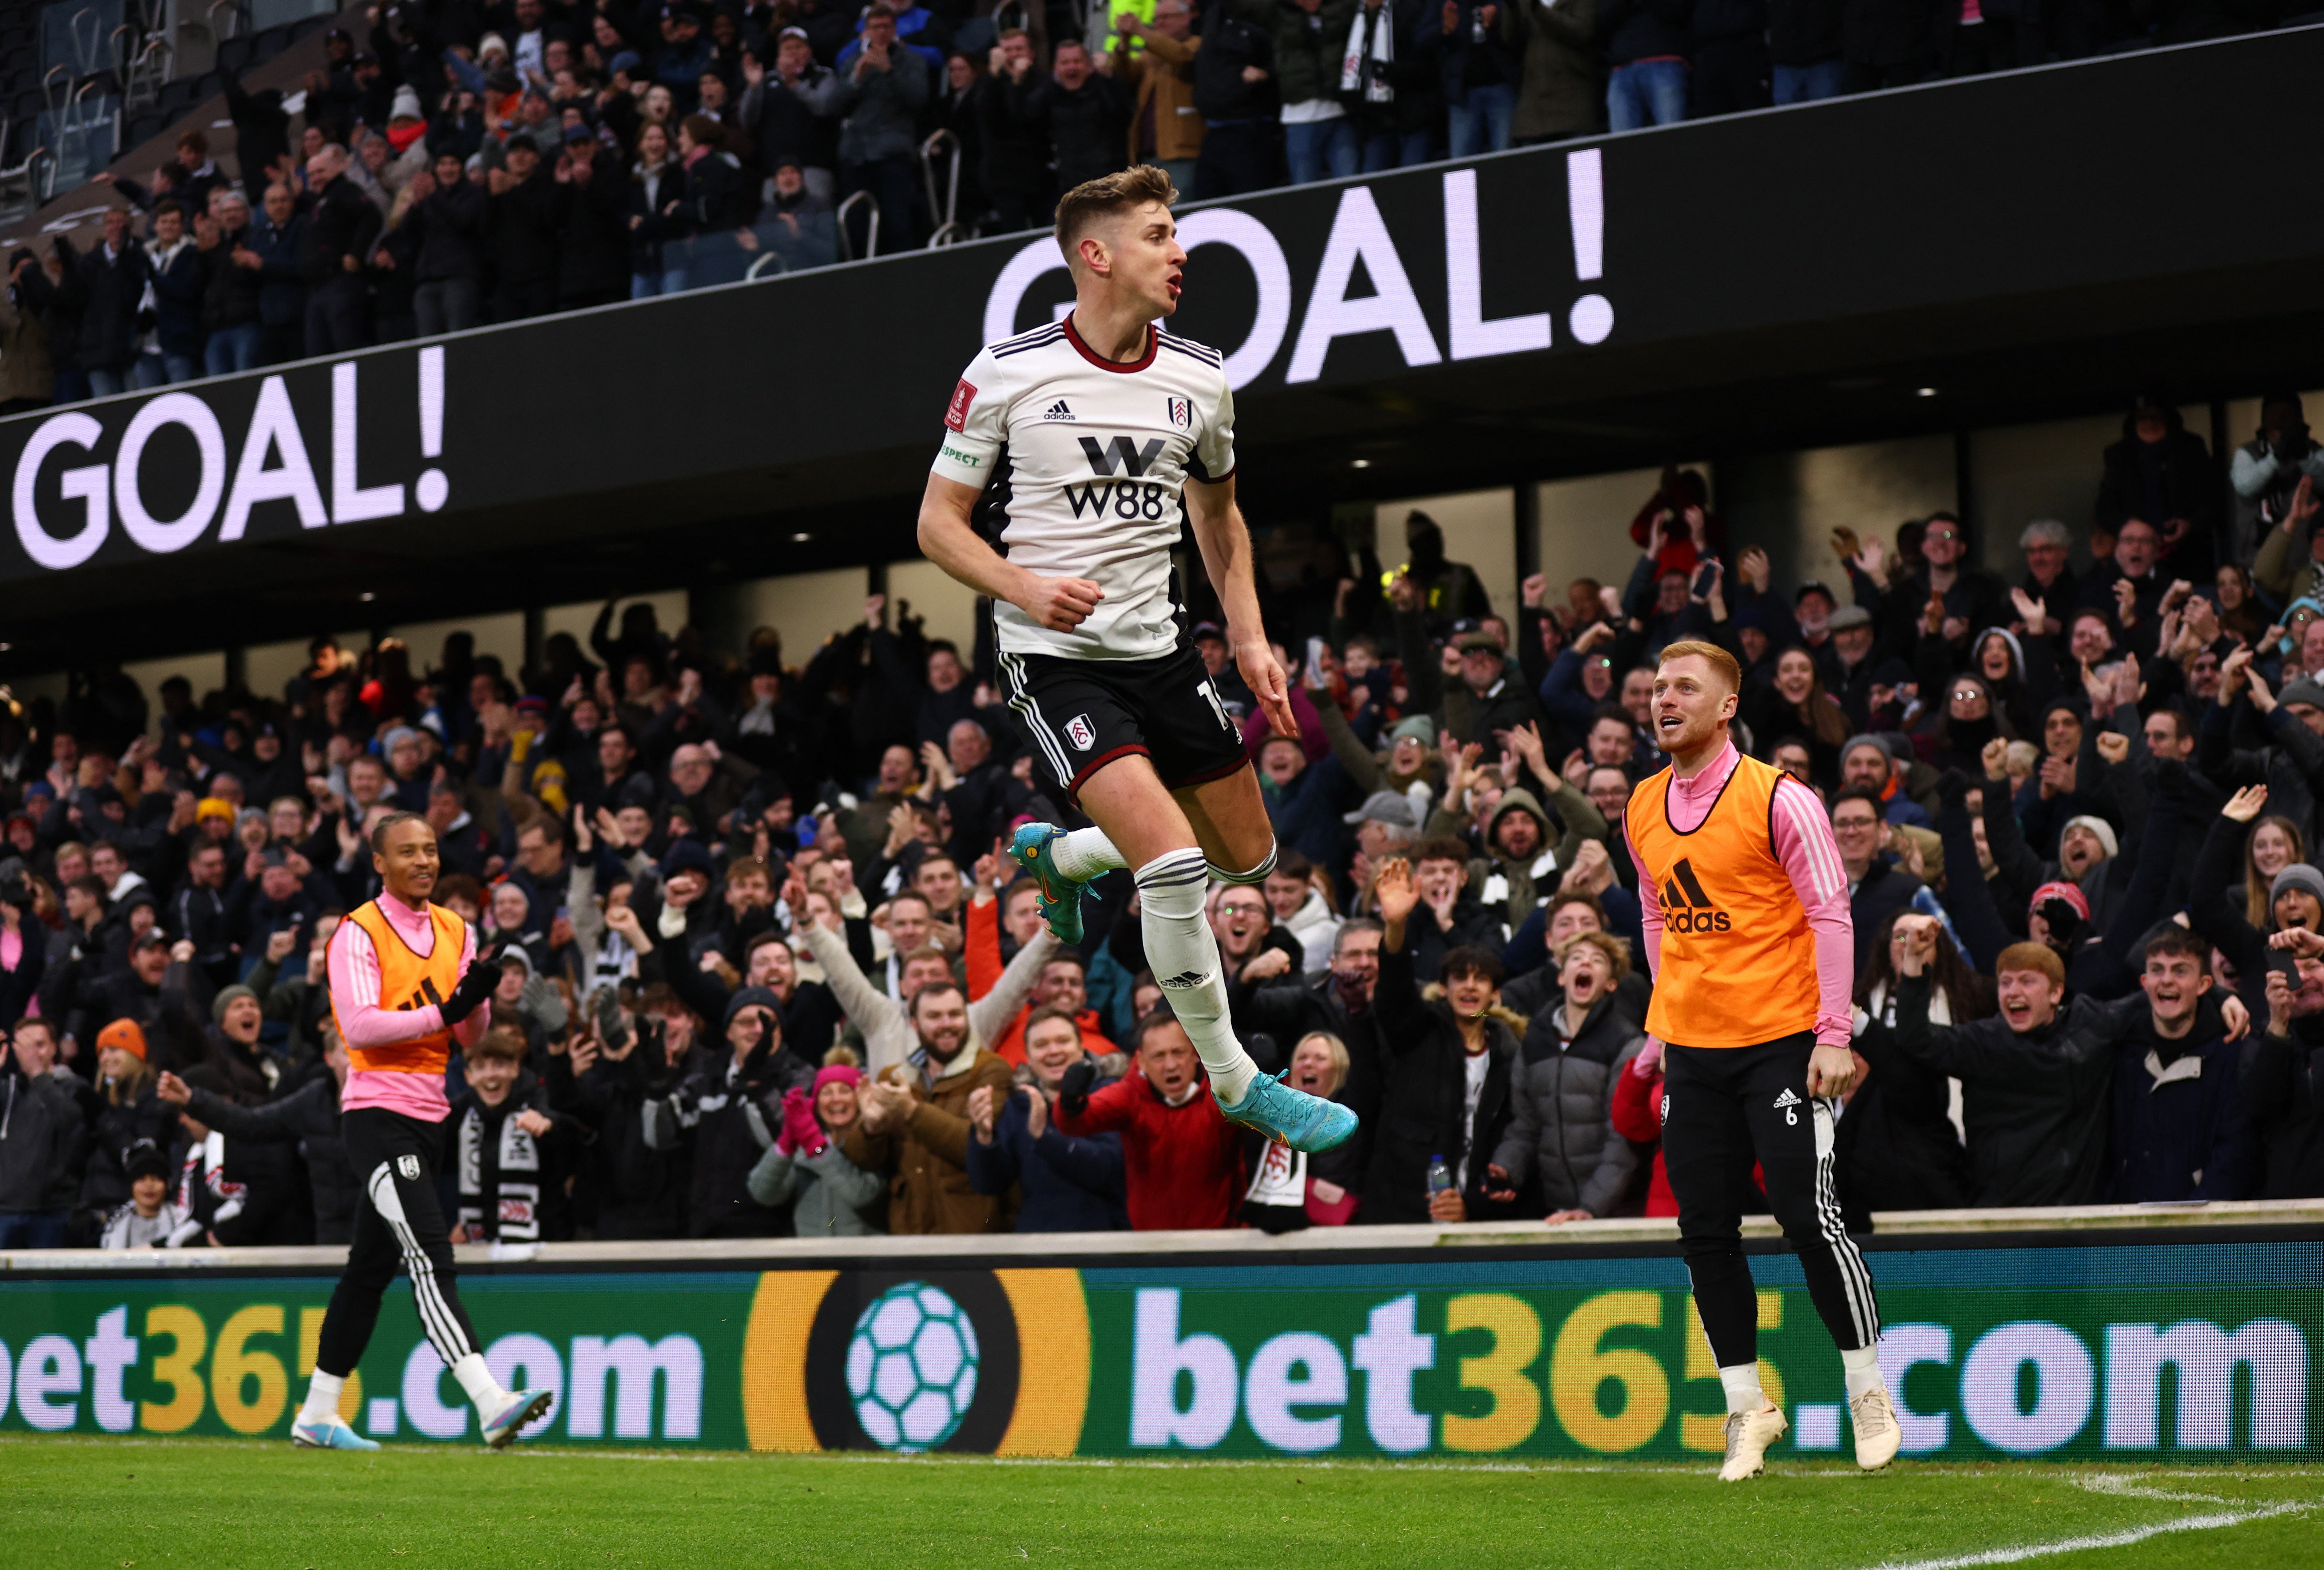 Fulham's Tom Cairney celebrates scoring